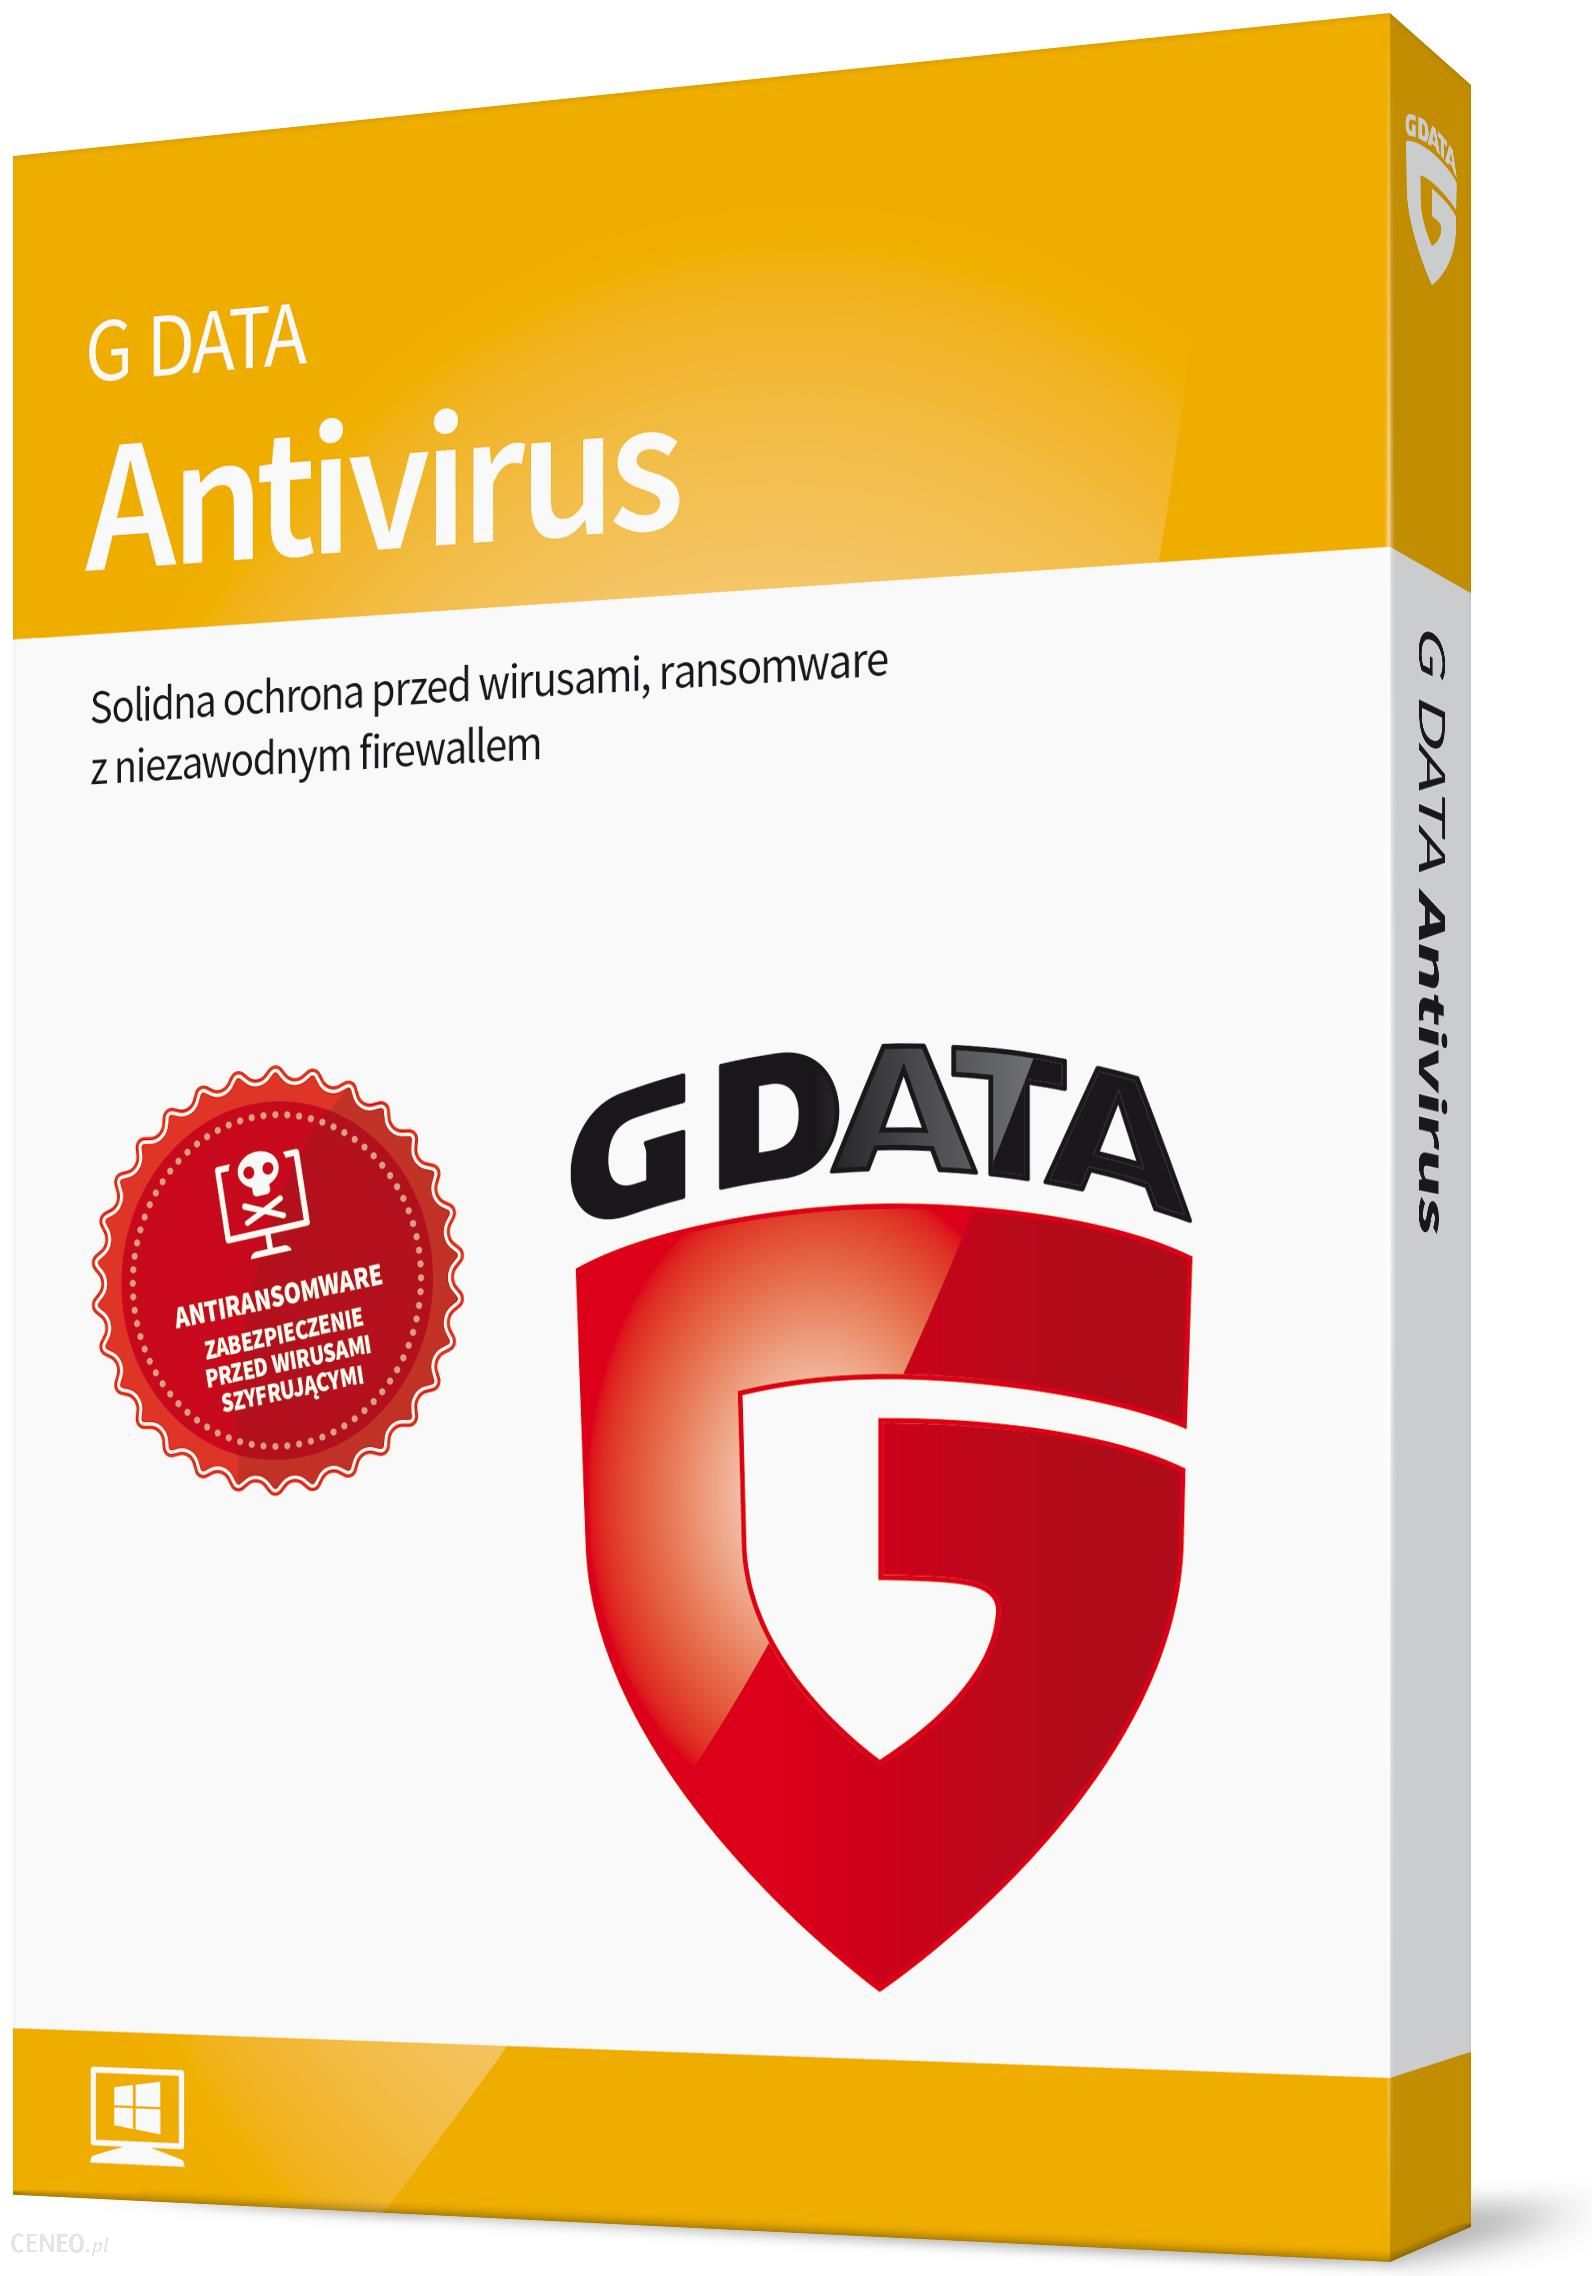 g data antivirus exceptions